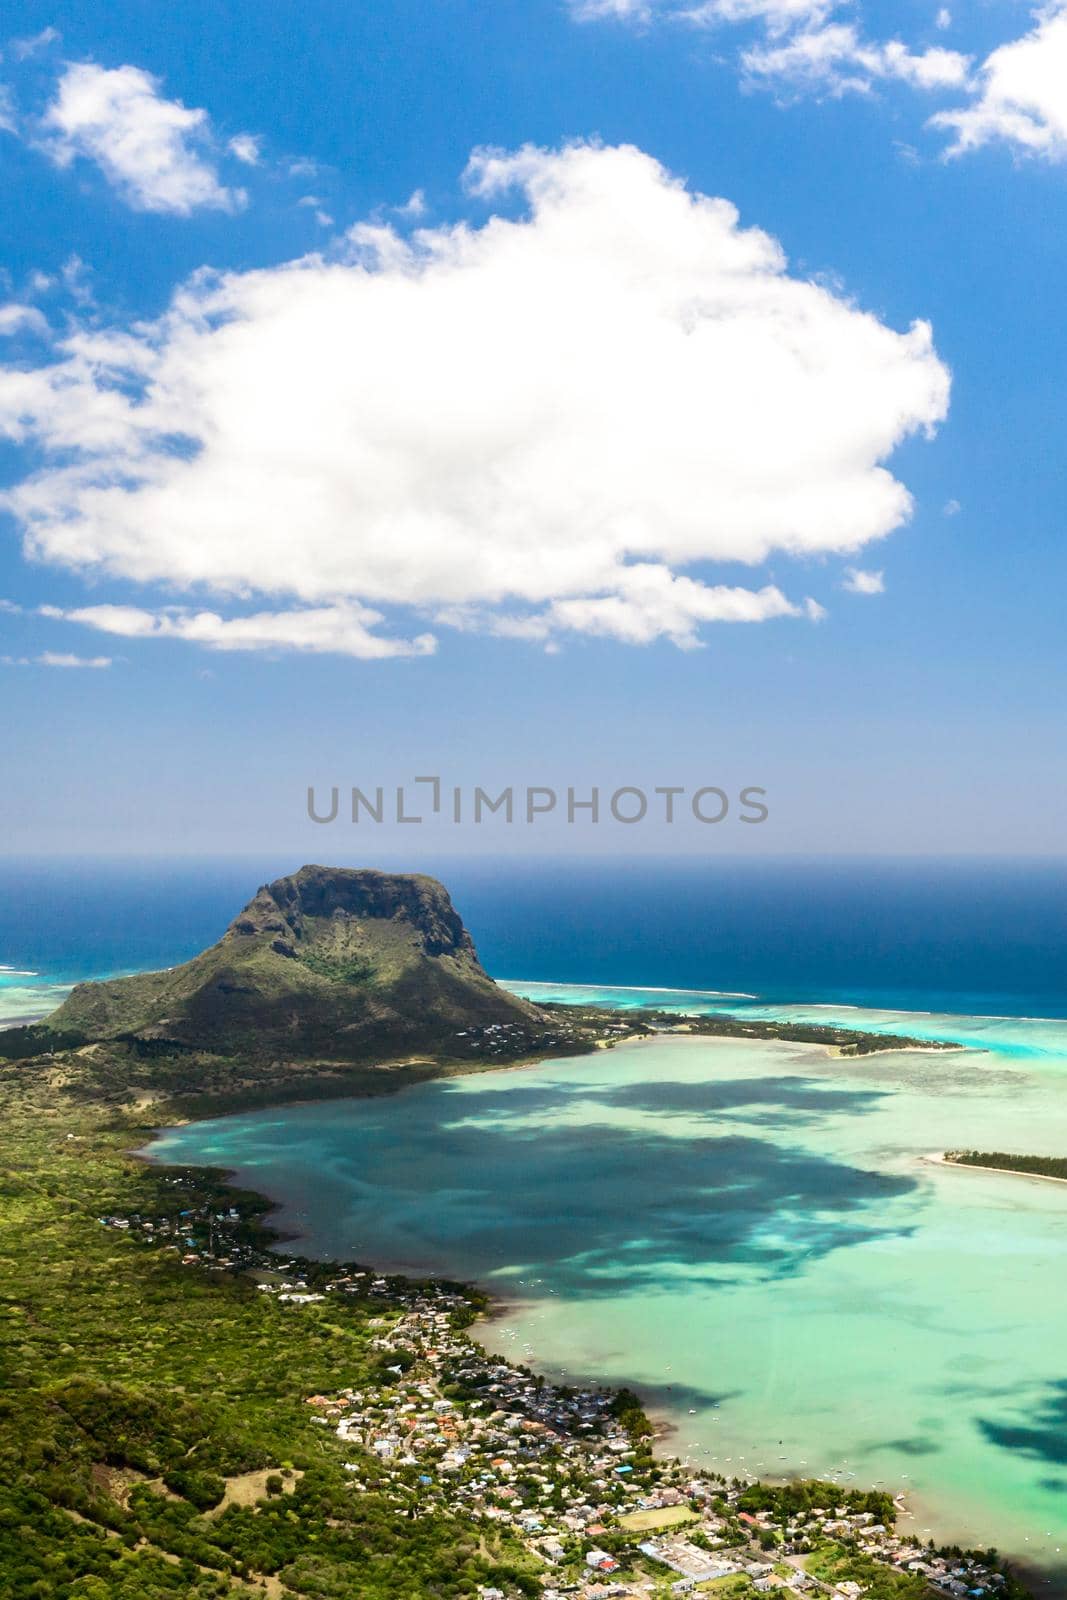 Bird's eye view of Mount Le Morne Brabant on the island of Mauritius.